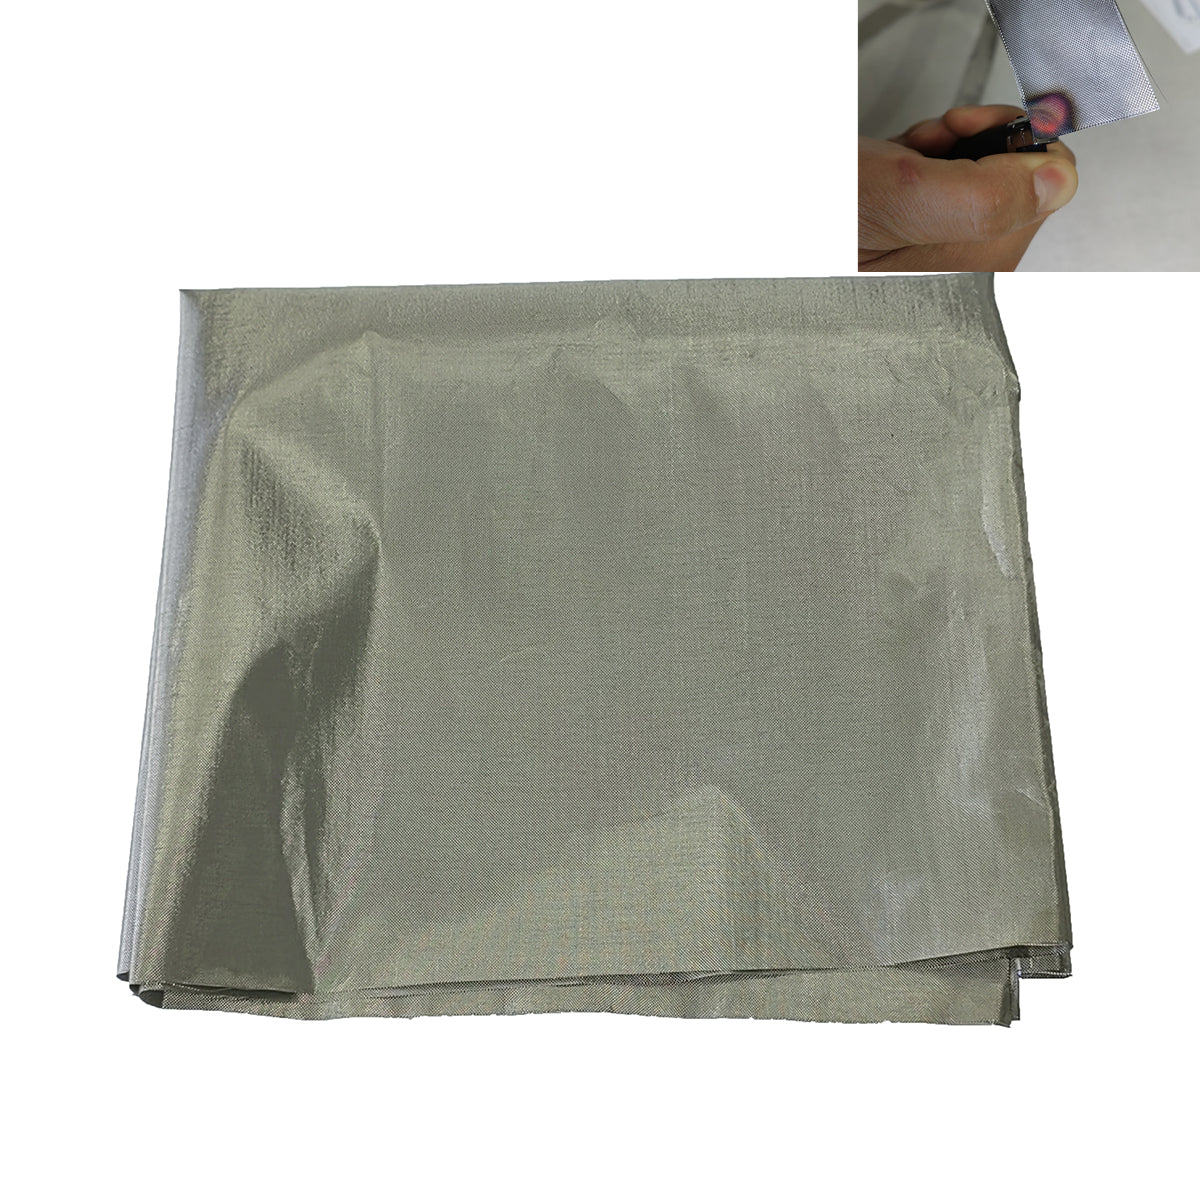 Faraday EMF Blocking Fabric for Electromagnetic Shielding Flame Retardant Sheets